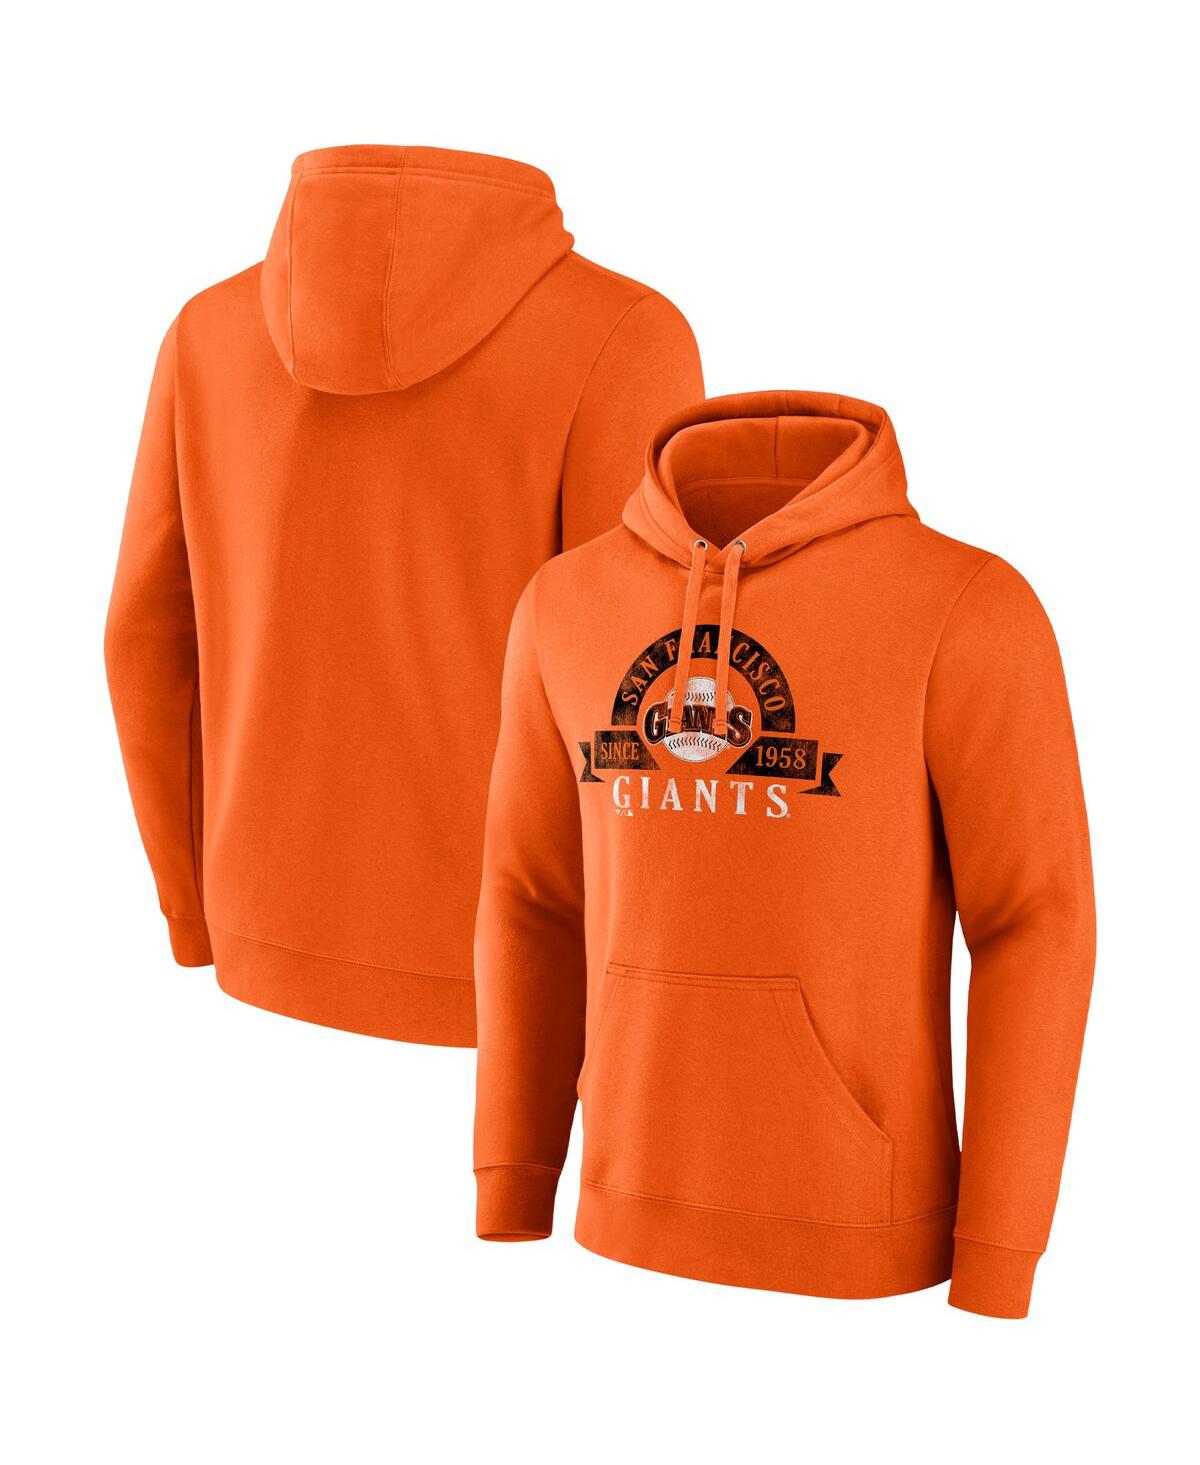 Men's Majestic Orange San Francisco Giants Utility Pullover Hoodie - Orange